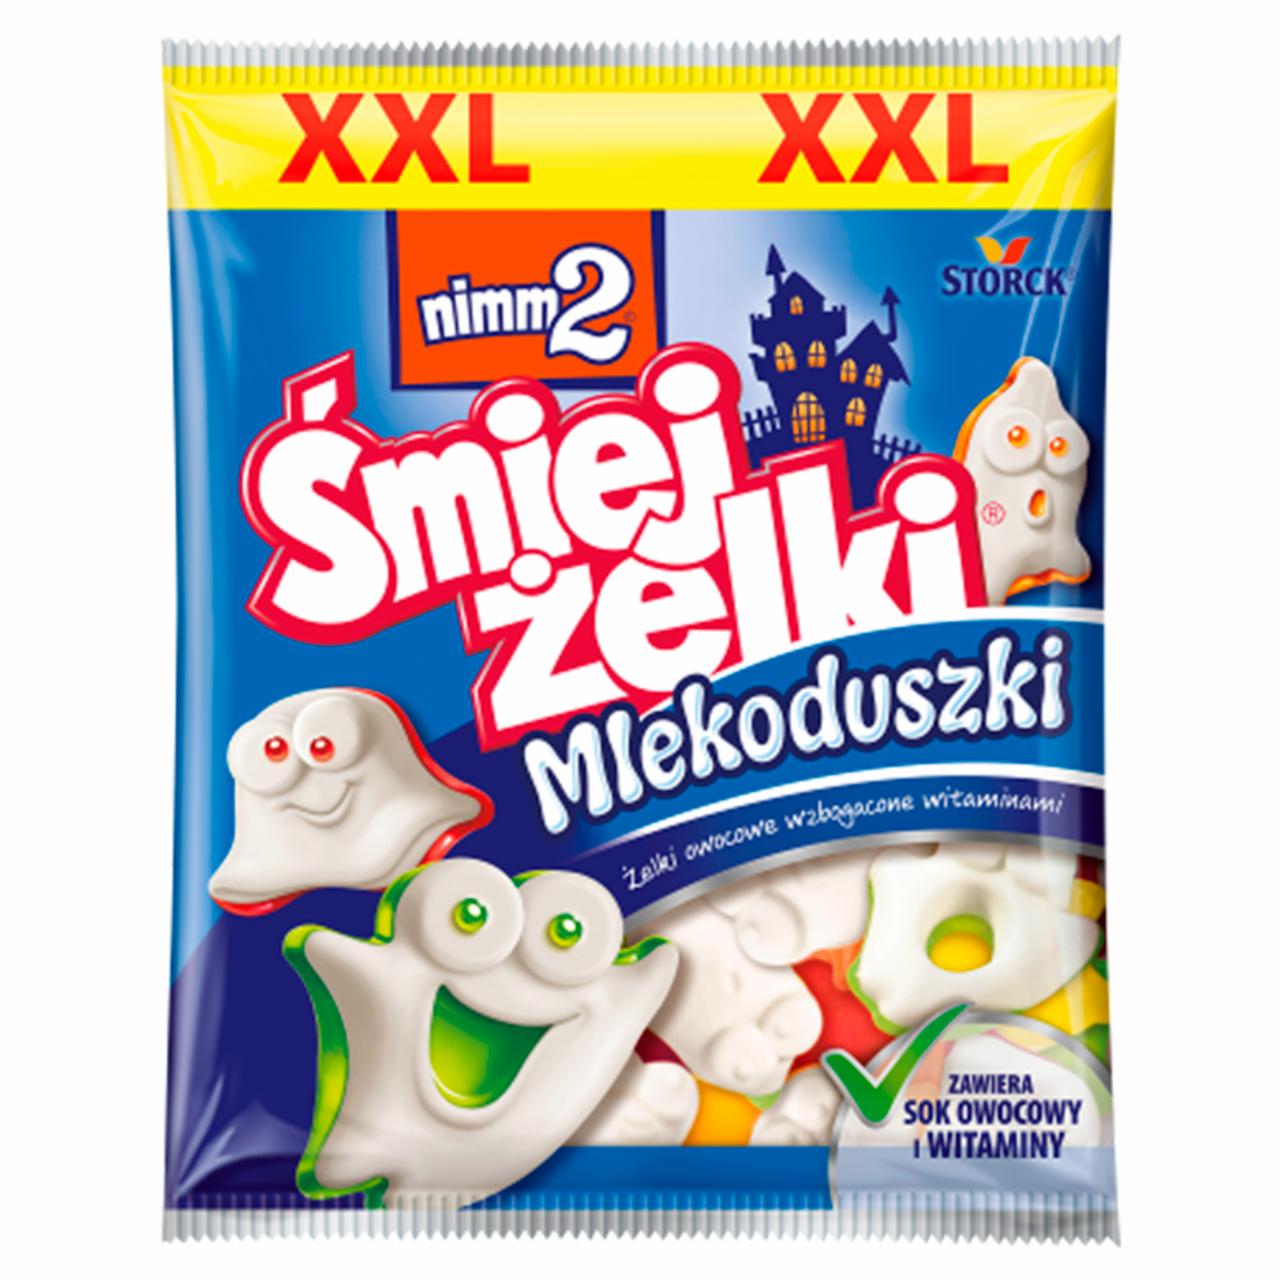 Фото - мармелад, обогащенный витаминами Śmiejżelki Mlekoduszki Fruit Jellies with Vitamins nimm2